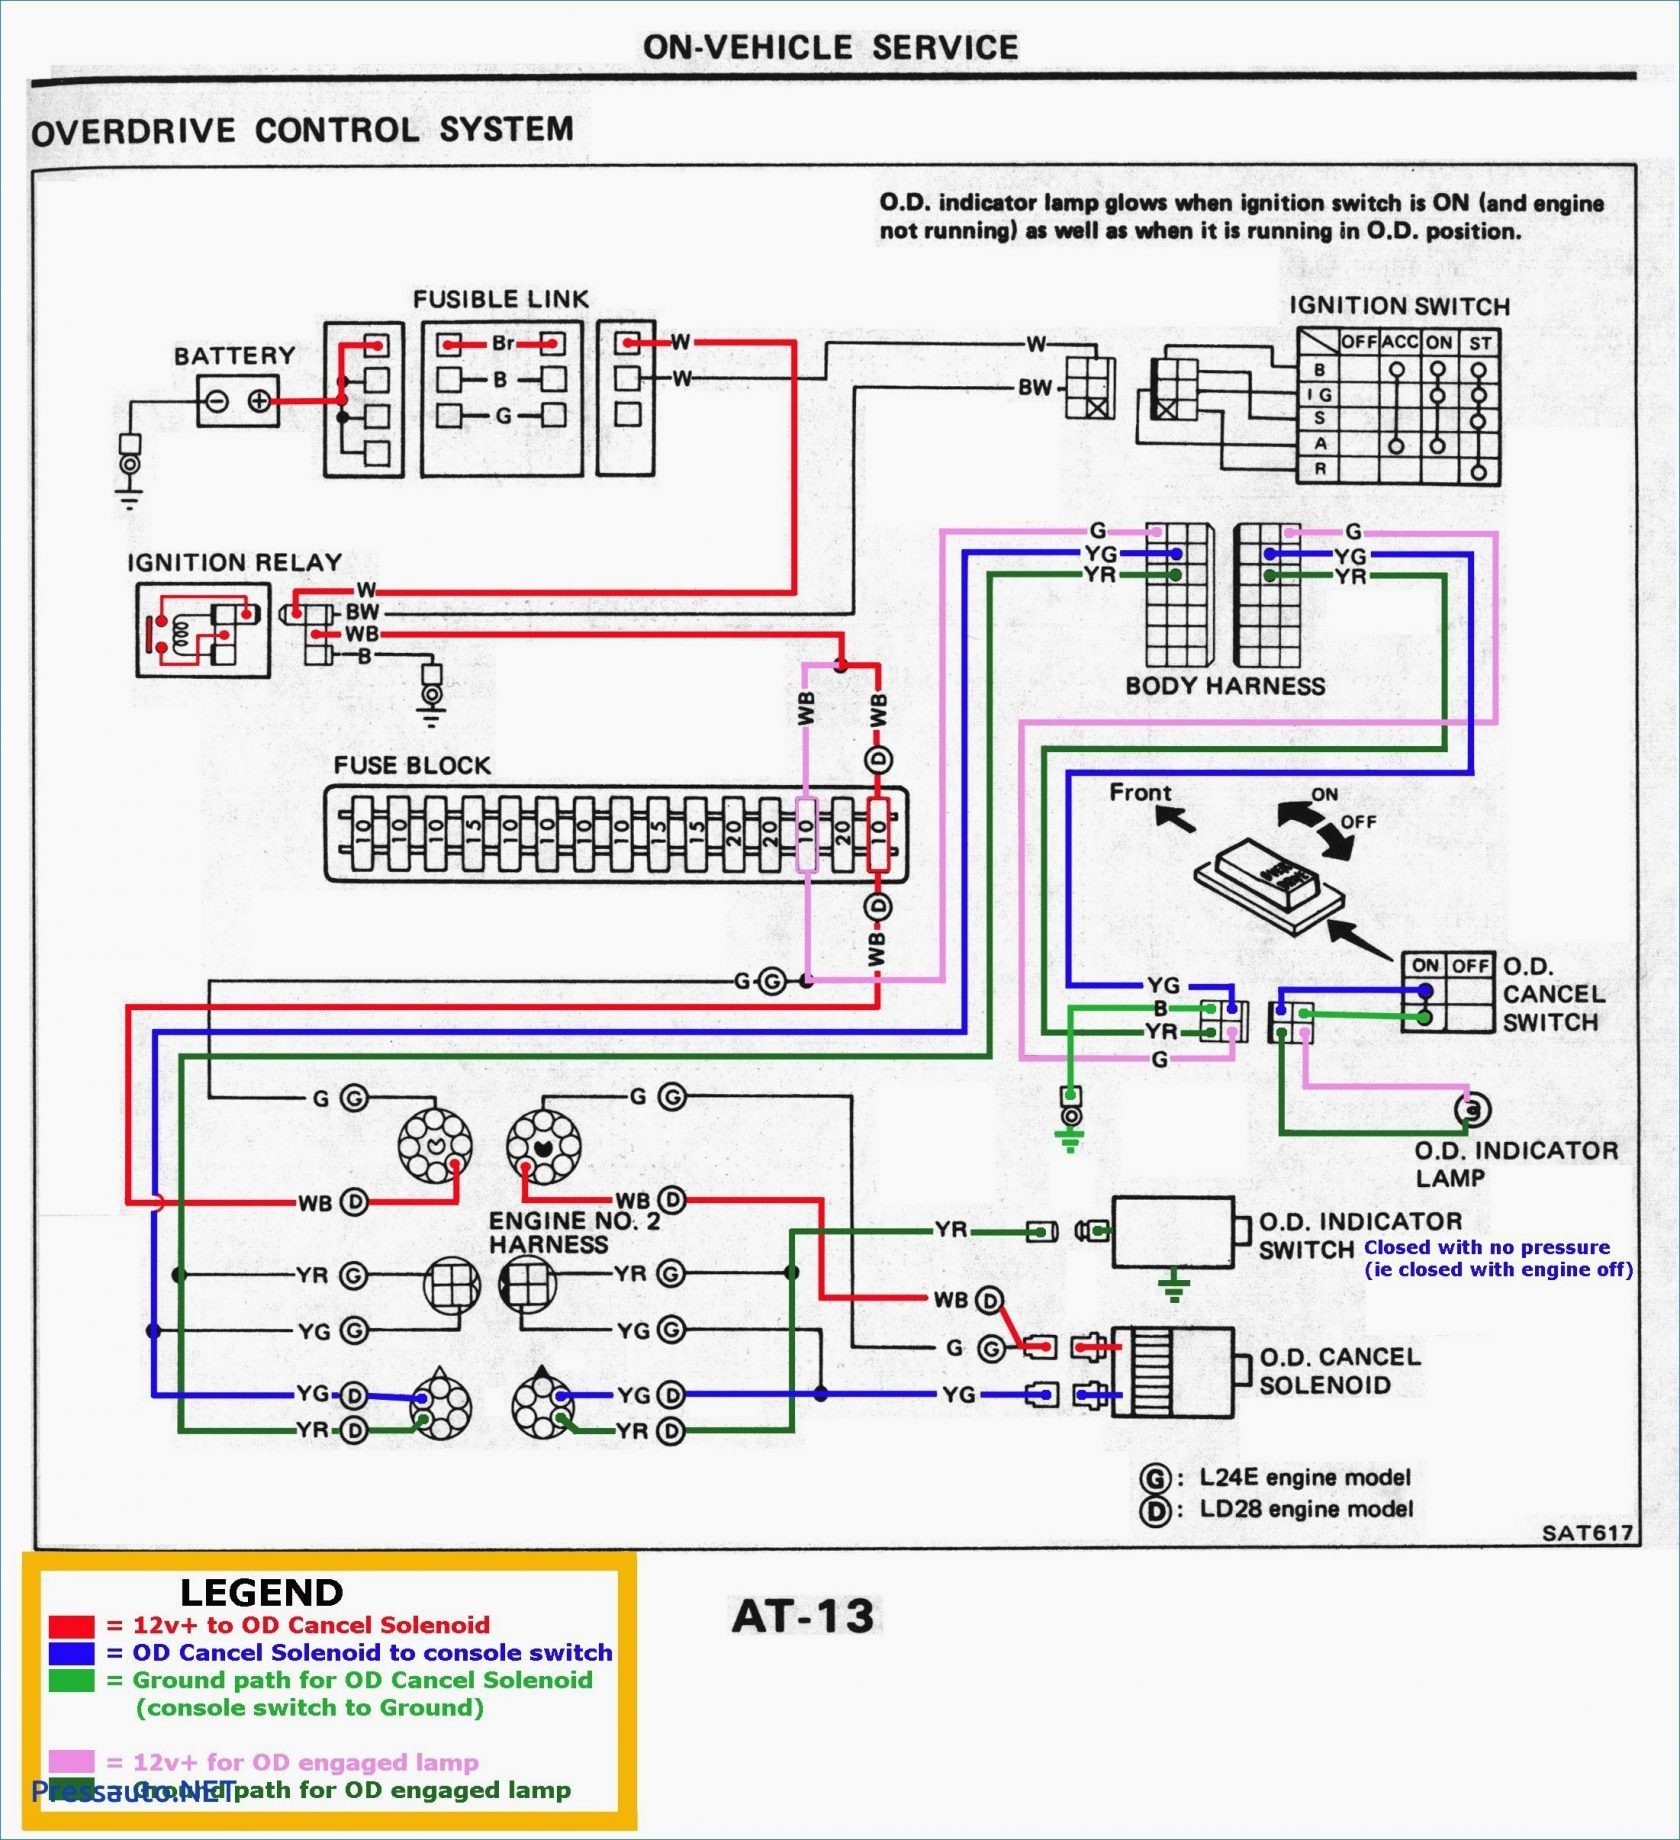 Honda Civic Engine Mount Diagram Wiring Diagram Besides Honda Accord Cooling System Diagram Likewise